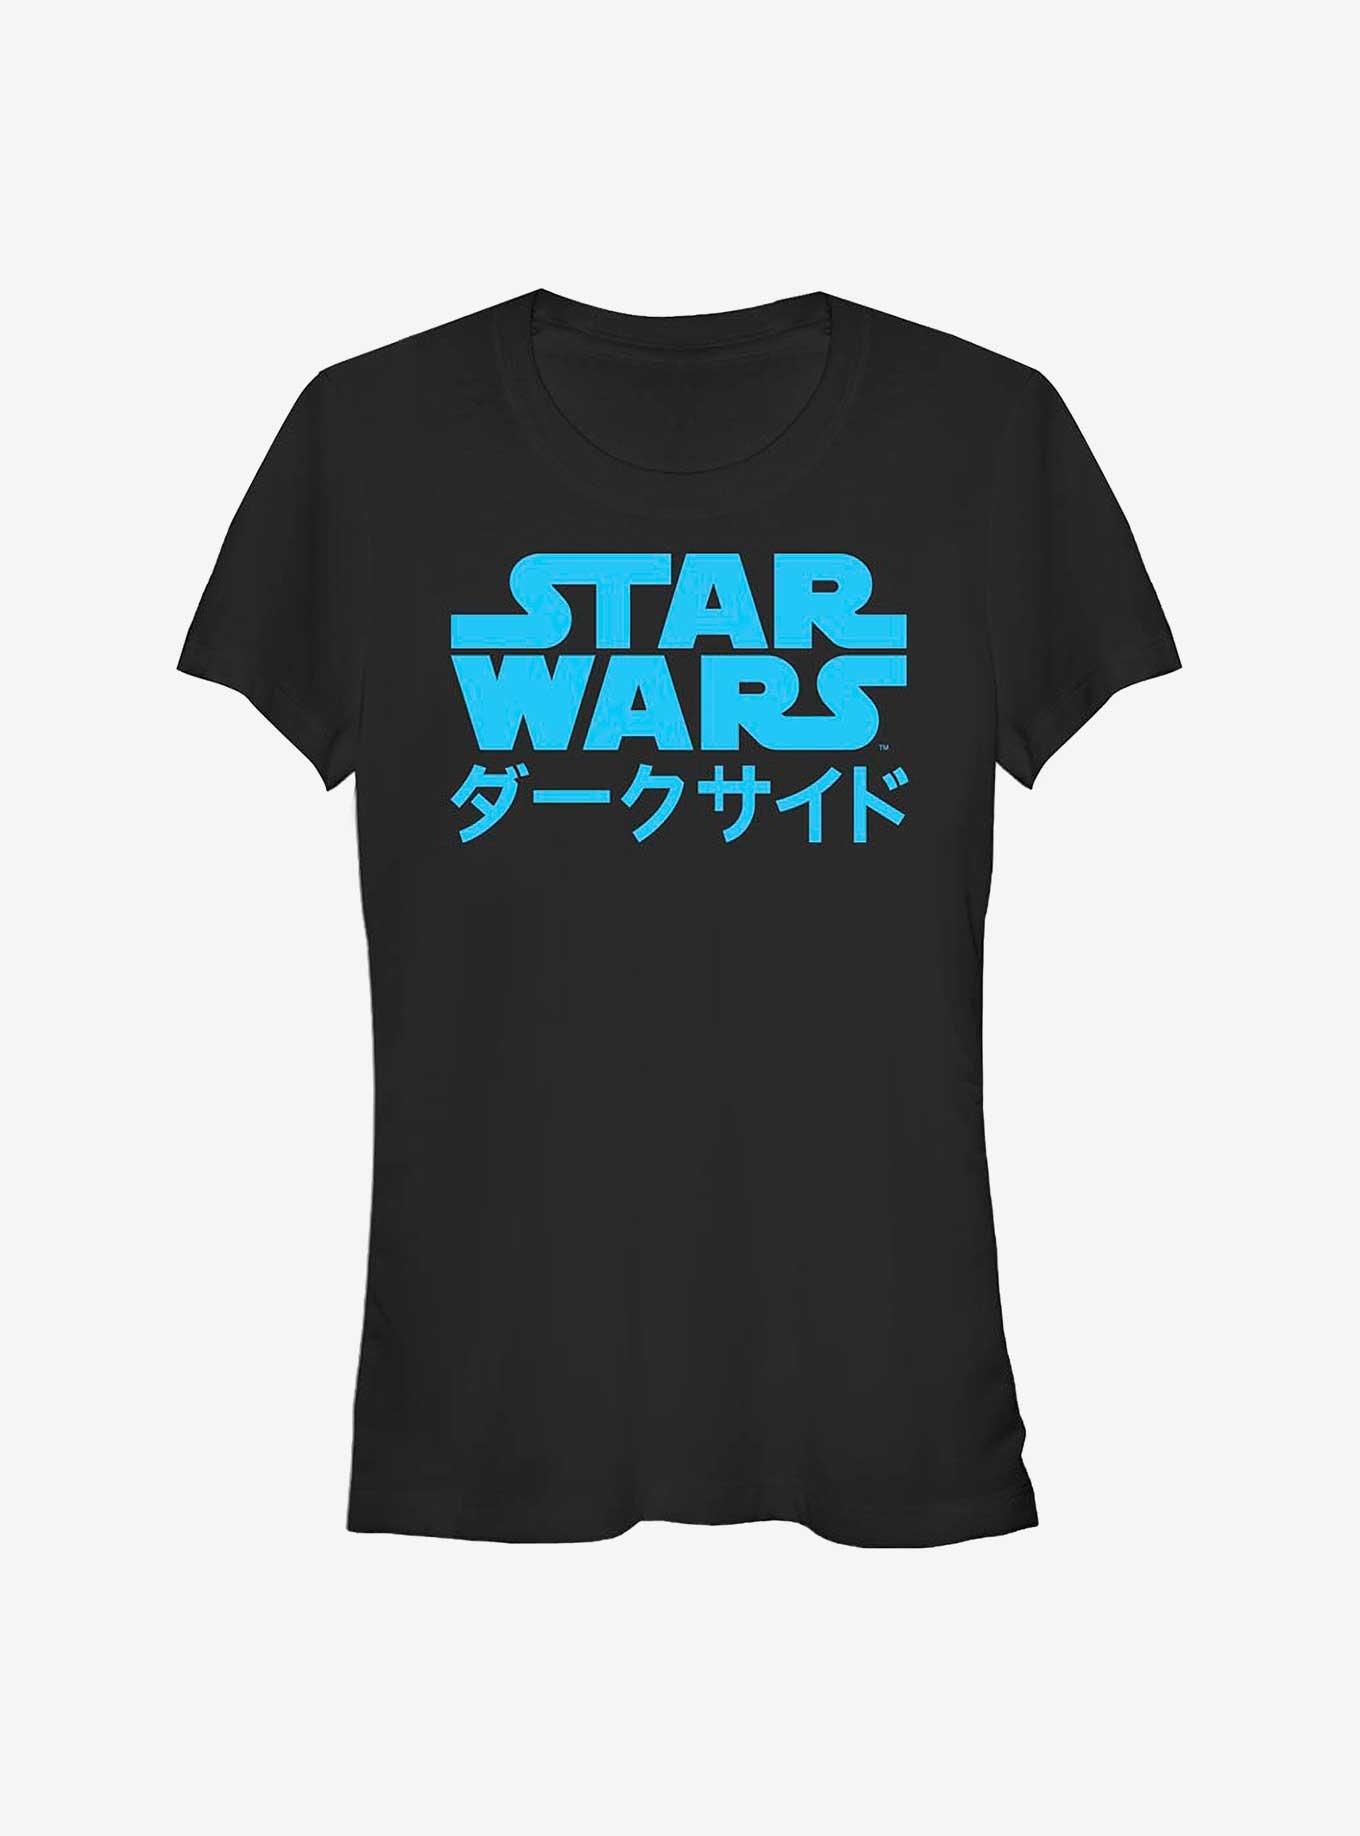 Star Wars Japanese Text Logo Girls T-Shirt